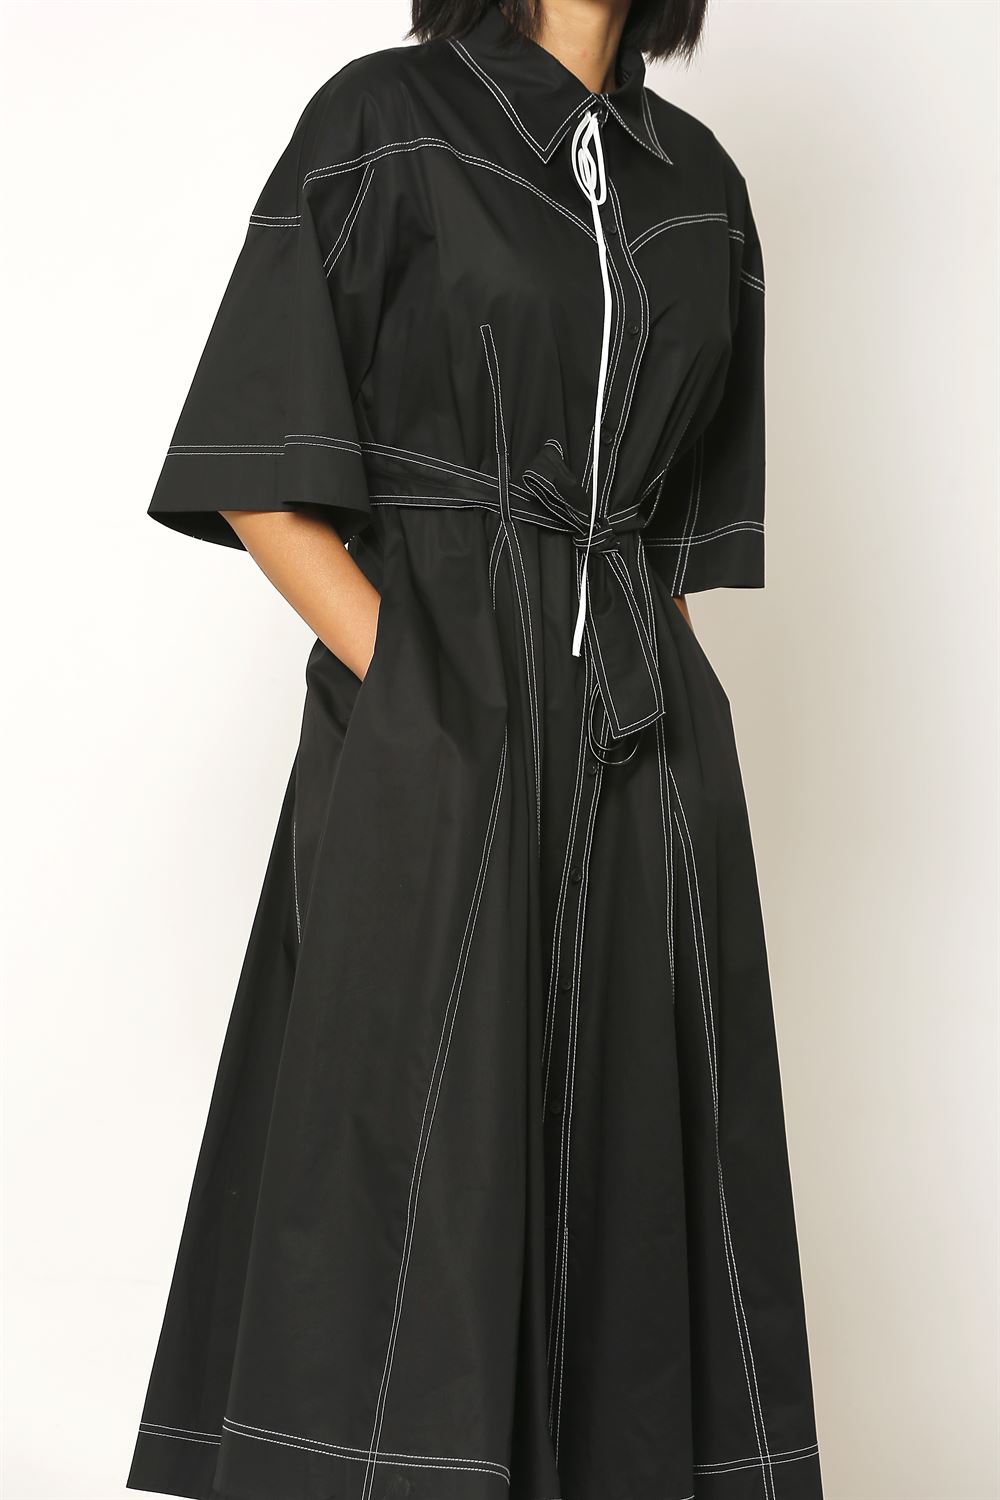 Süs Dikişli Belden Kemerli Cotton Elbise - Siyah